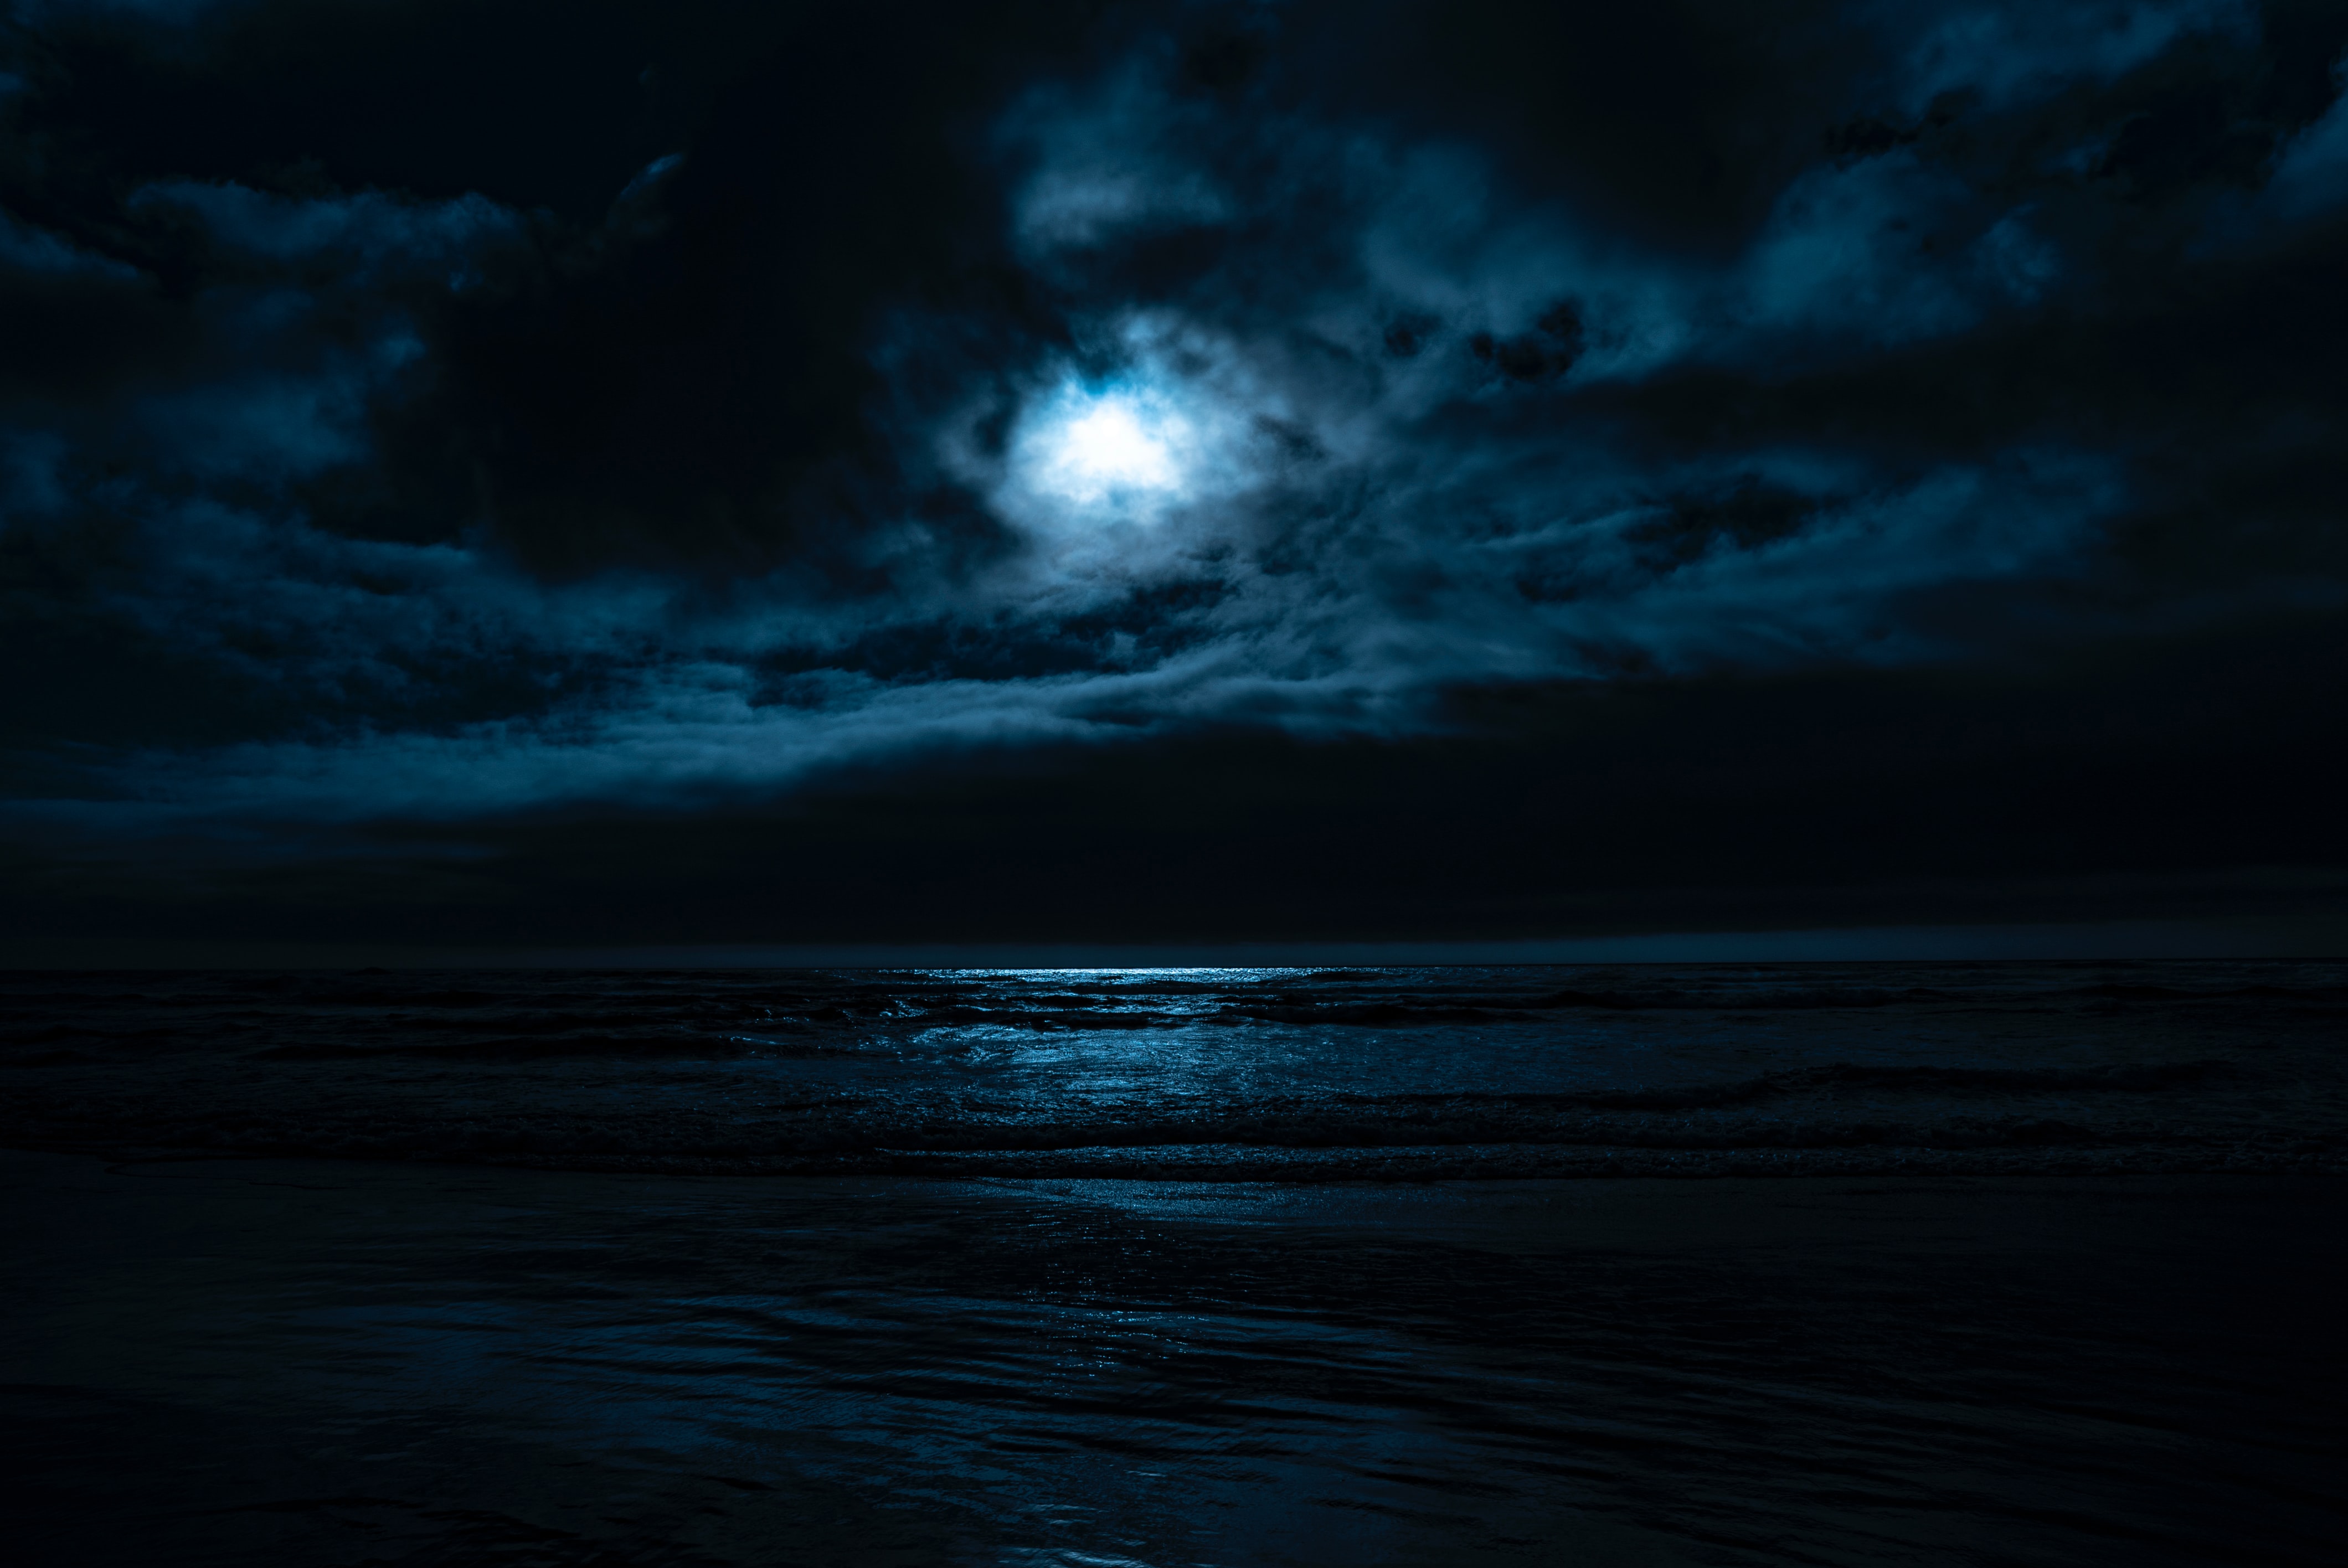 dark misty moonlit night by beach